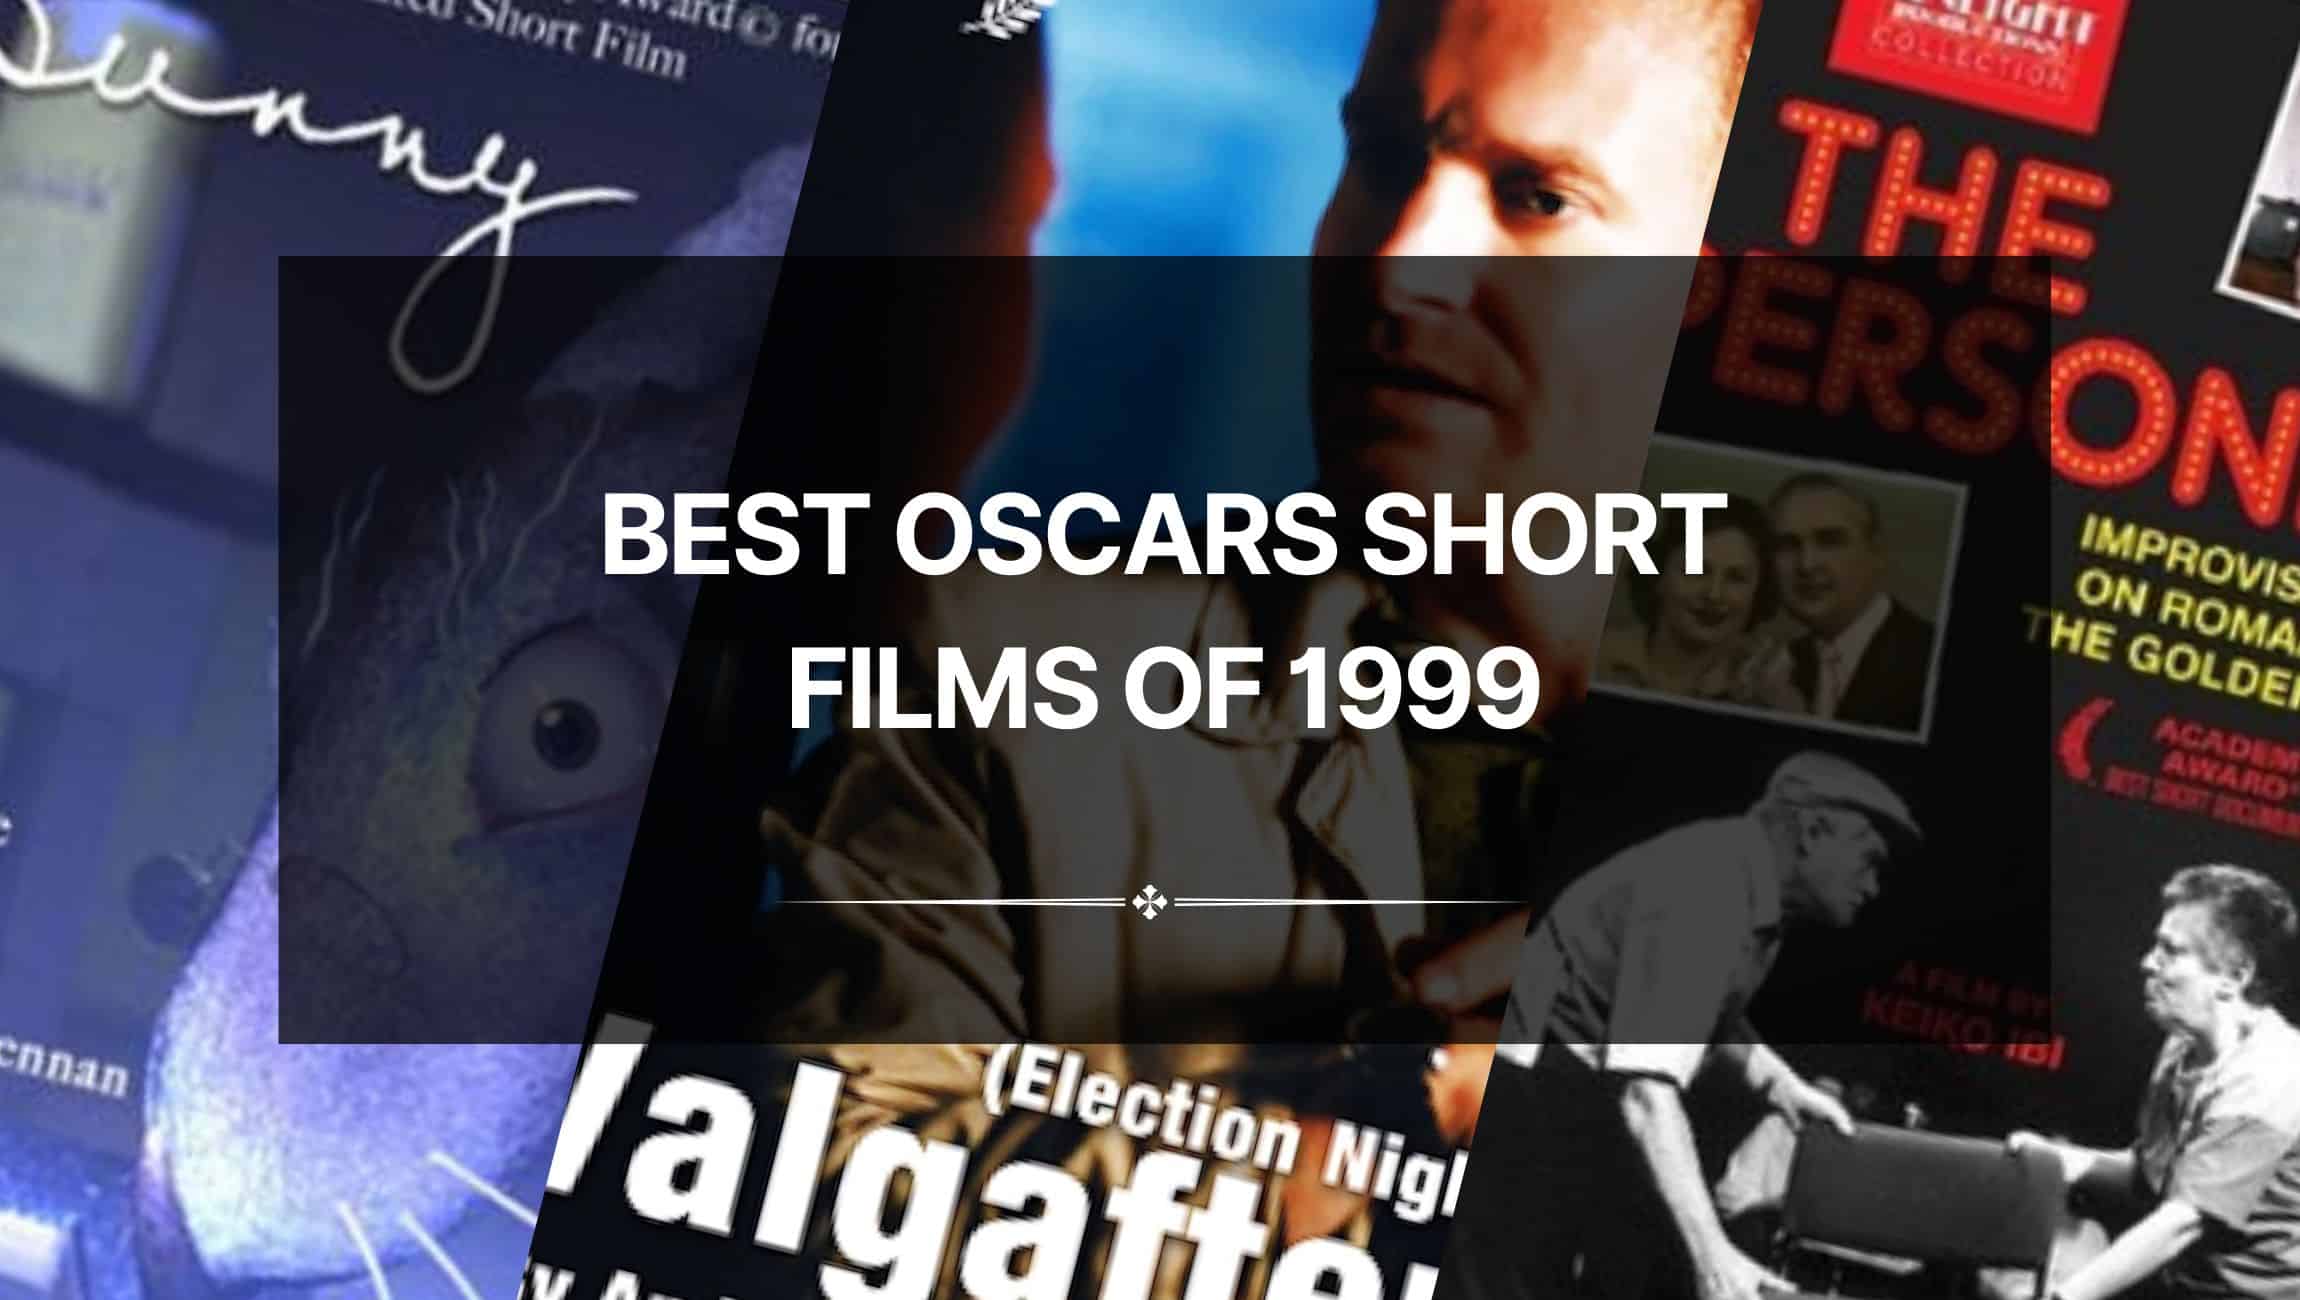 Best Oscars Short Films of 1999